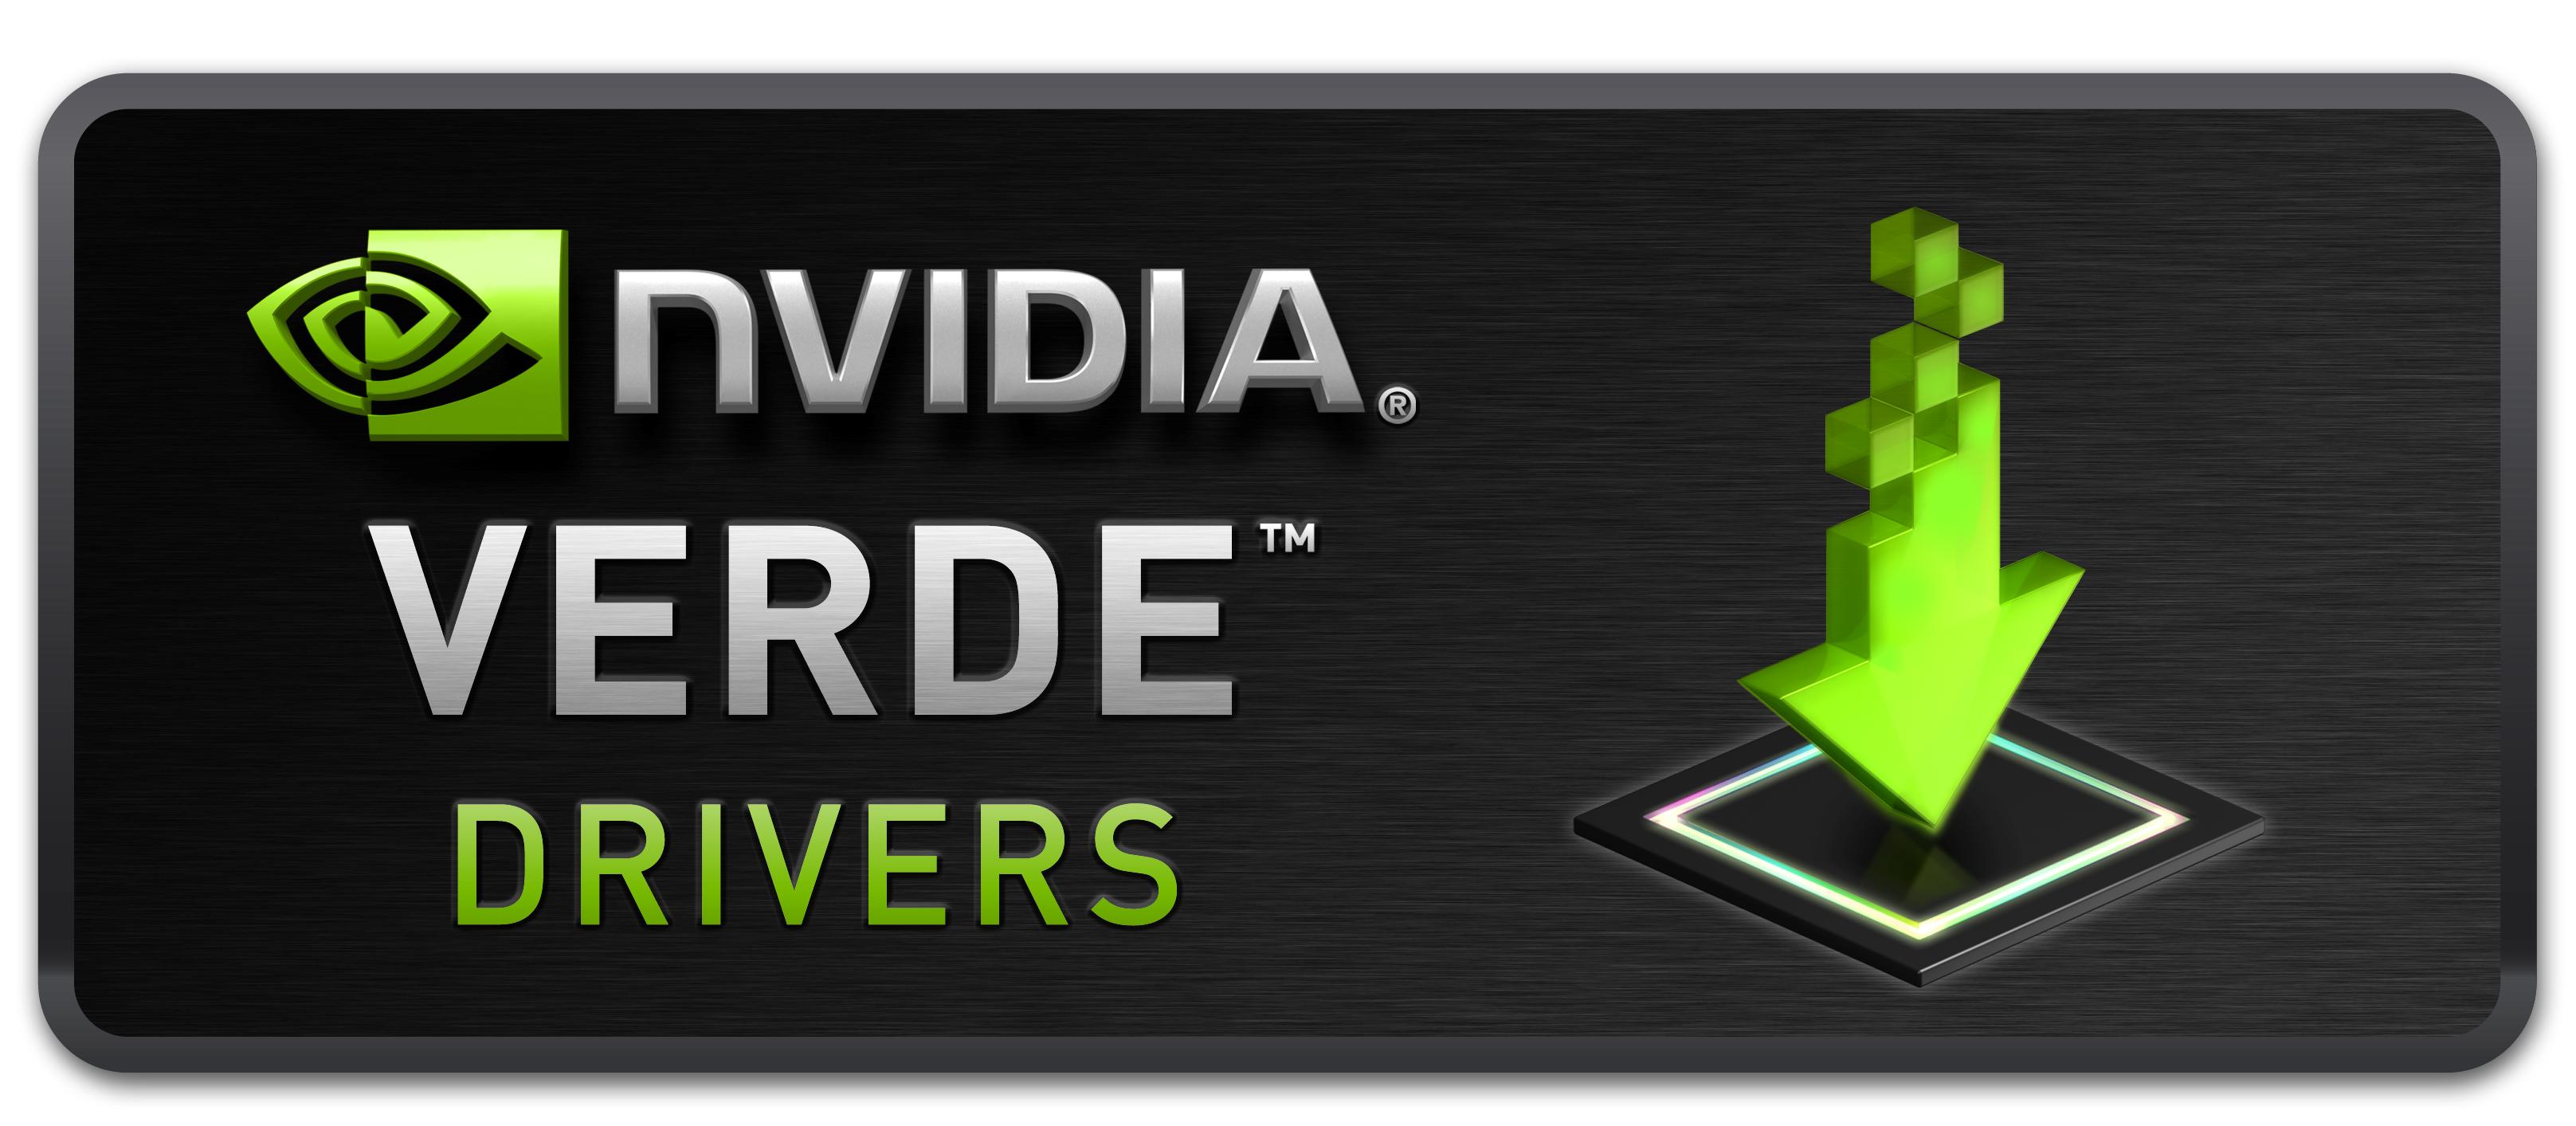 Loading nvidia. NVIDIA Drivers. Драйвер картинка. Нвидиа драйвера. Драйвер видеокарты NVIDIA GEFORCE.